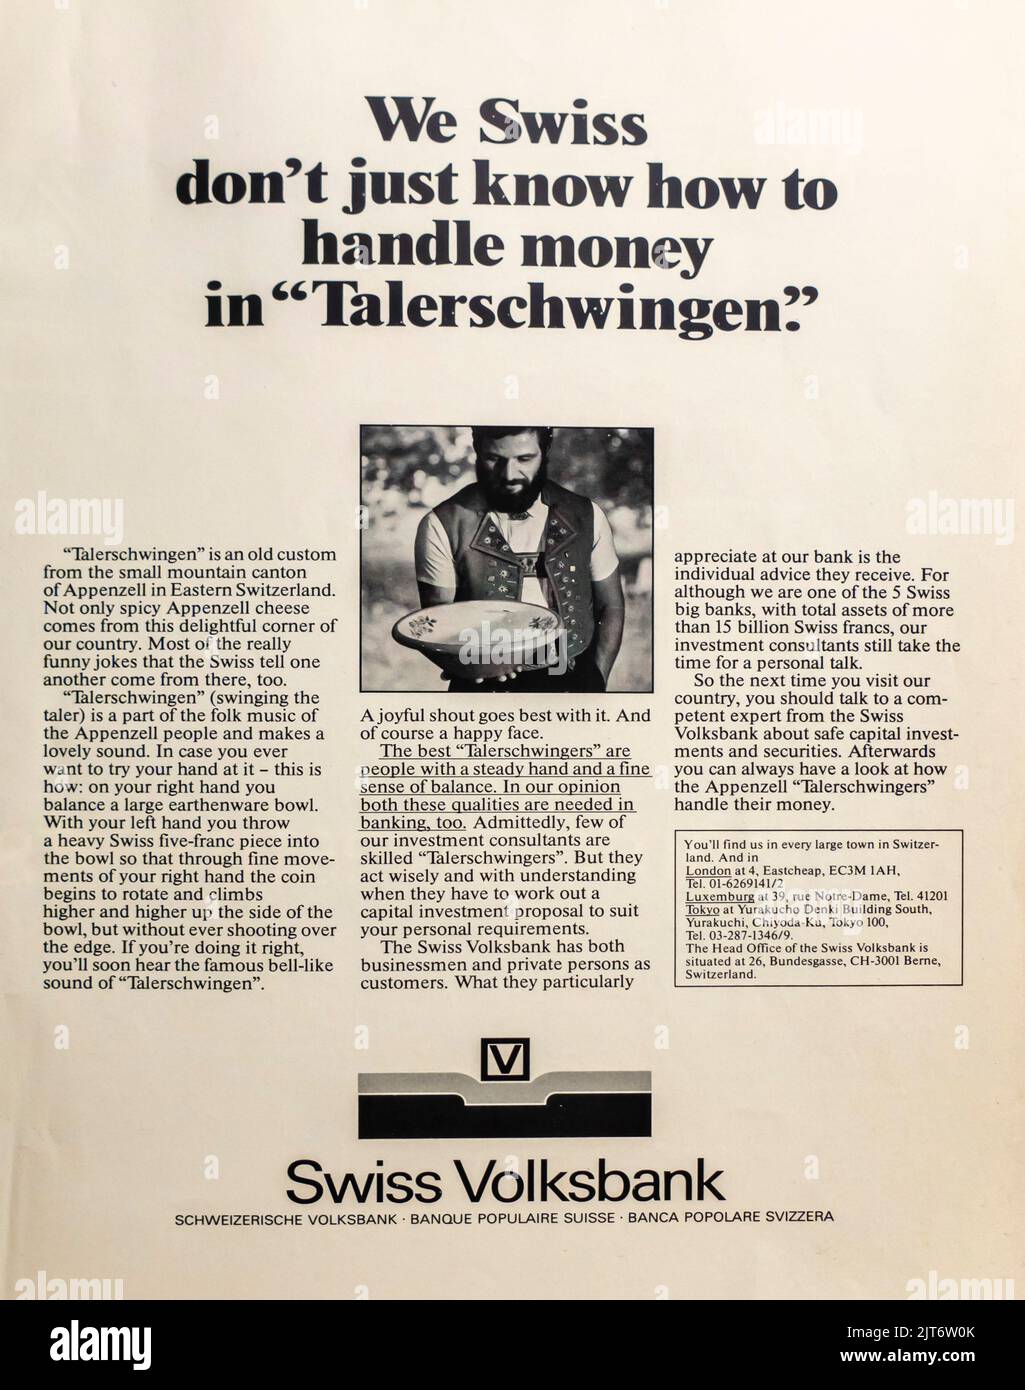 Swiss Volksbank advertisement placed inside NatGeo magazine,  November 1980 Stock Photo